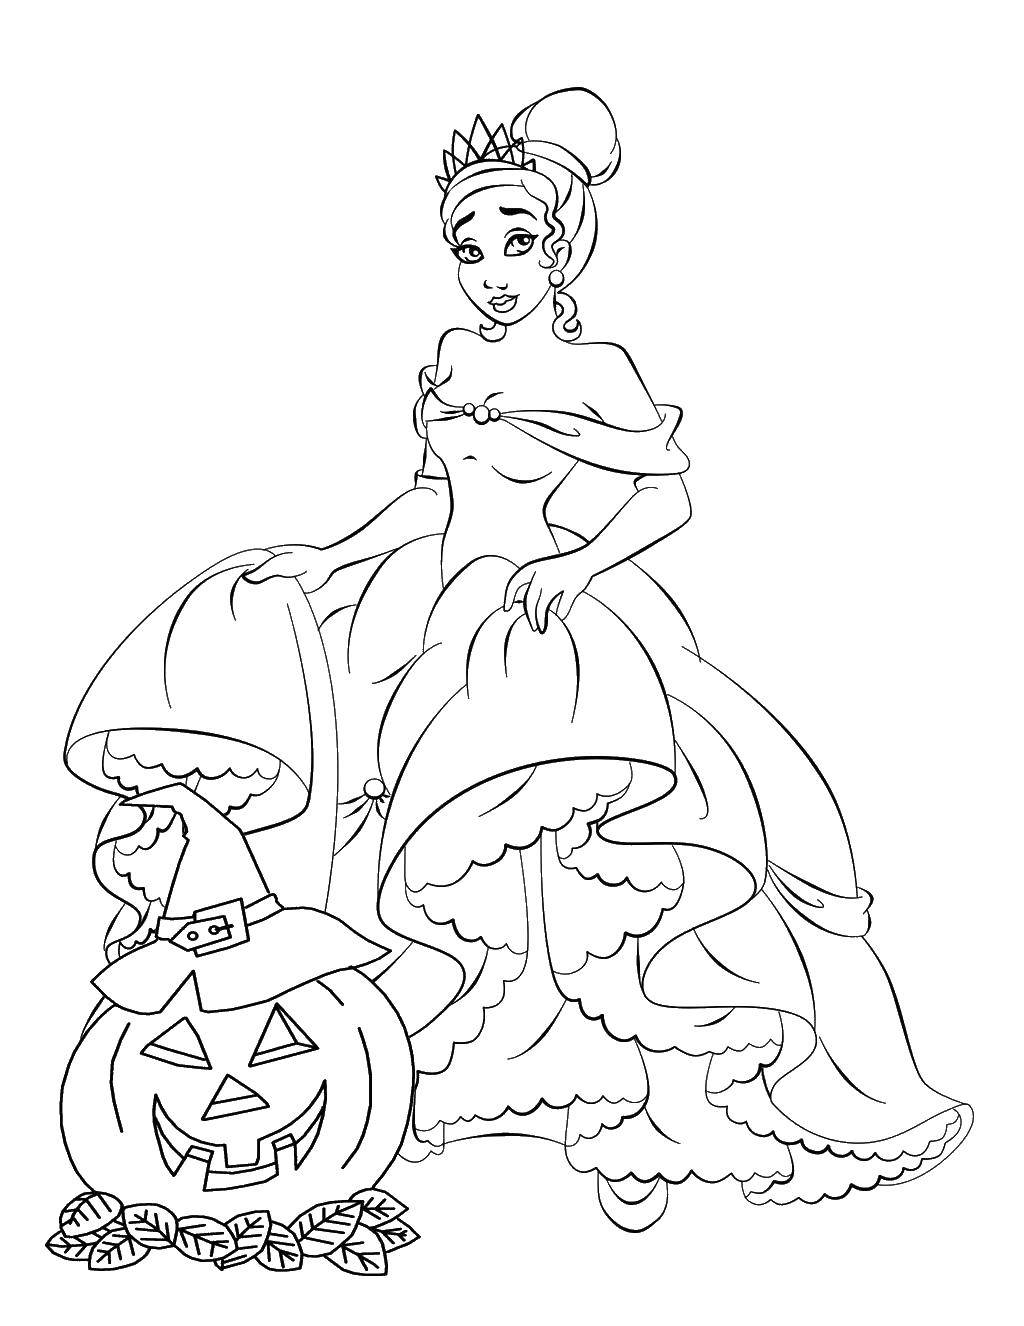 Coloring Belle for Halloween. Category Halloween. Tags:  Halloween, pumpkin, Belle.